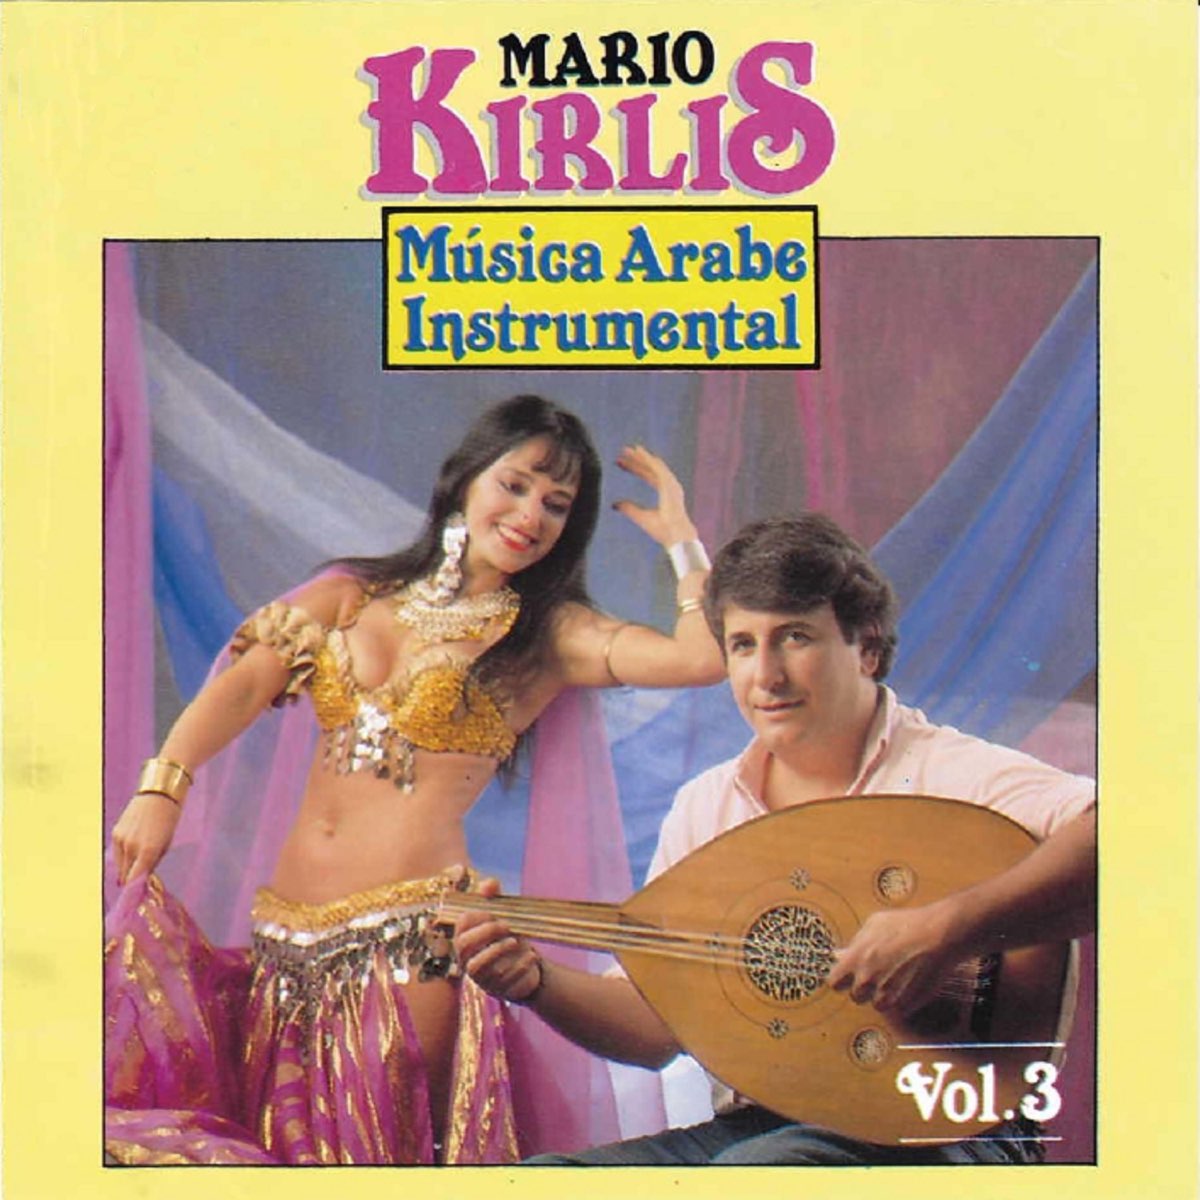 Música Arabe Instrumental, Vol. 3 by Mario Kirlis on Apple Music